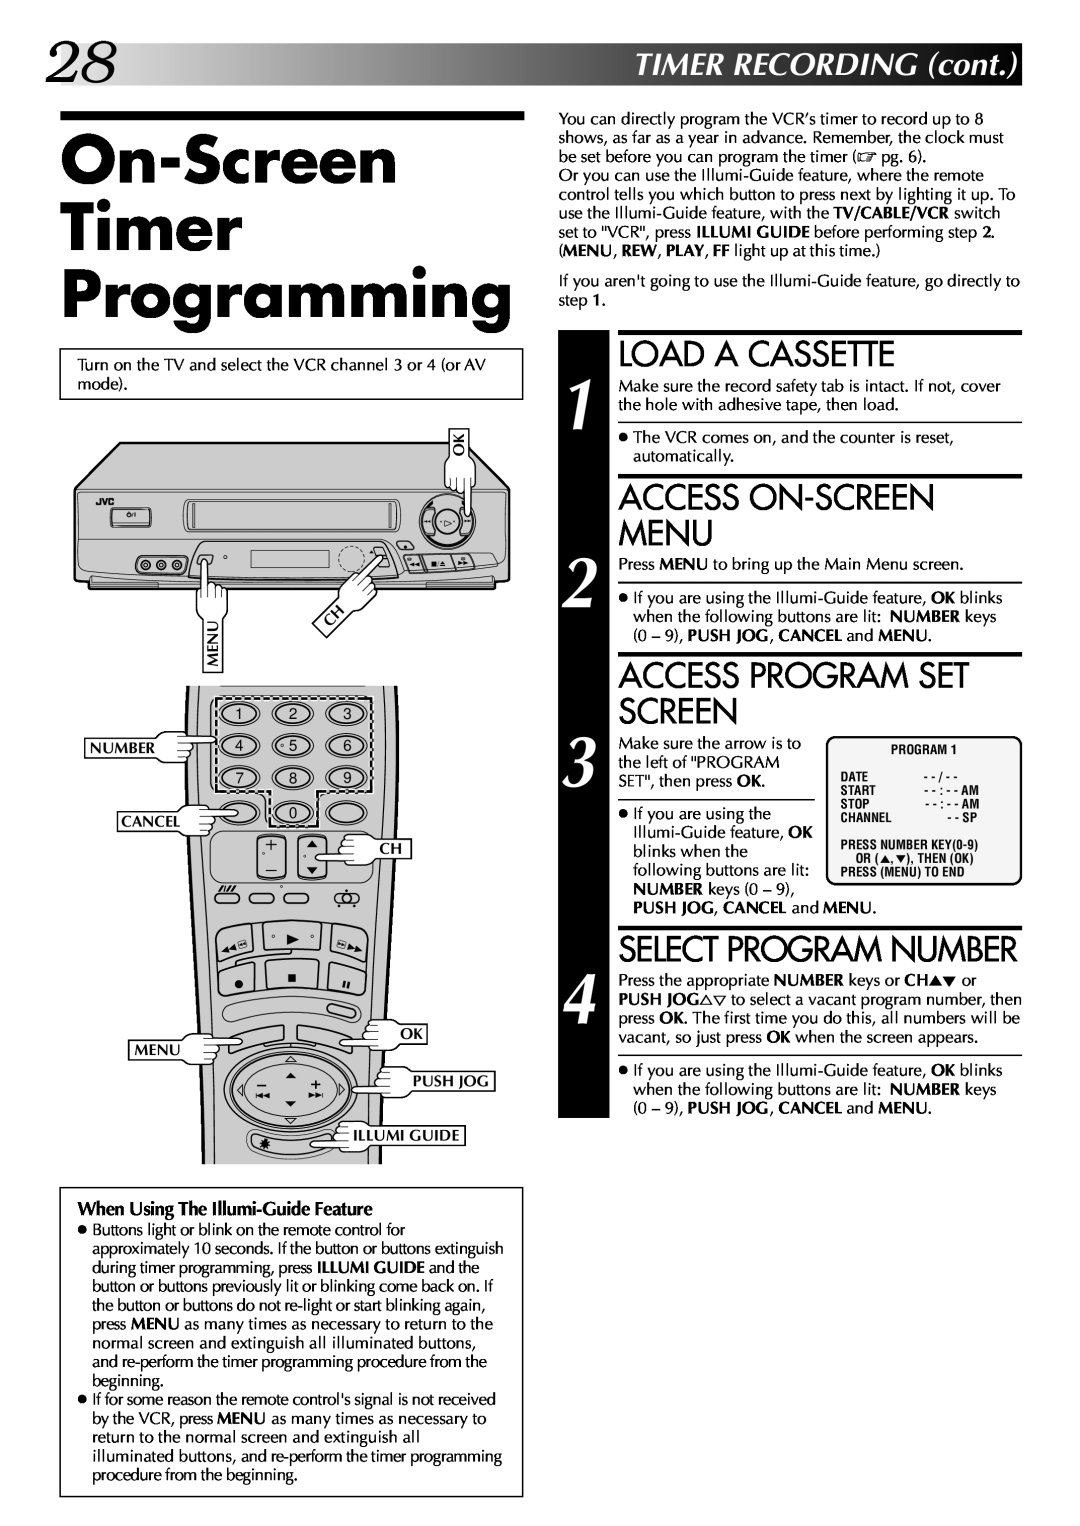 JVC HR-J7004UM manual On-Screen Timer Programming, Access Program Set, 28TIMERRECORDINGcont, Select Program Number, Menu 